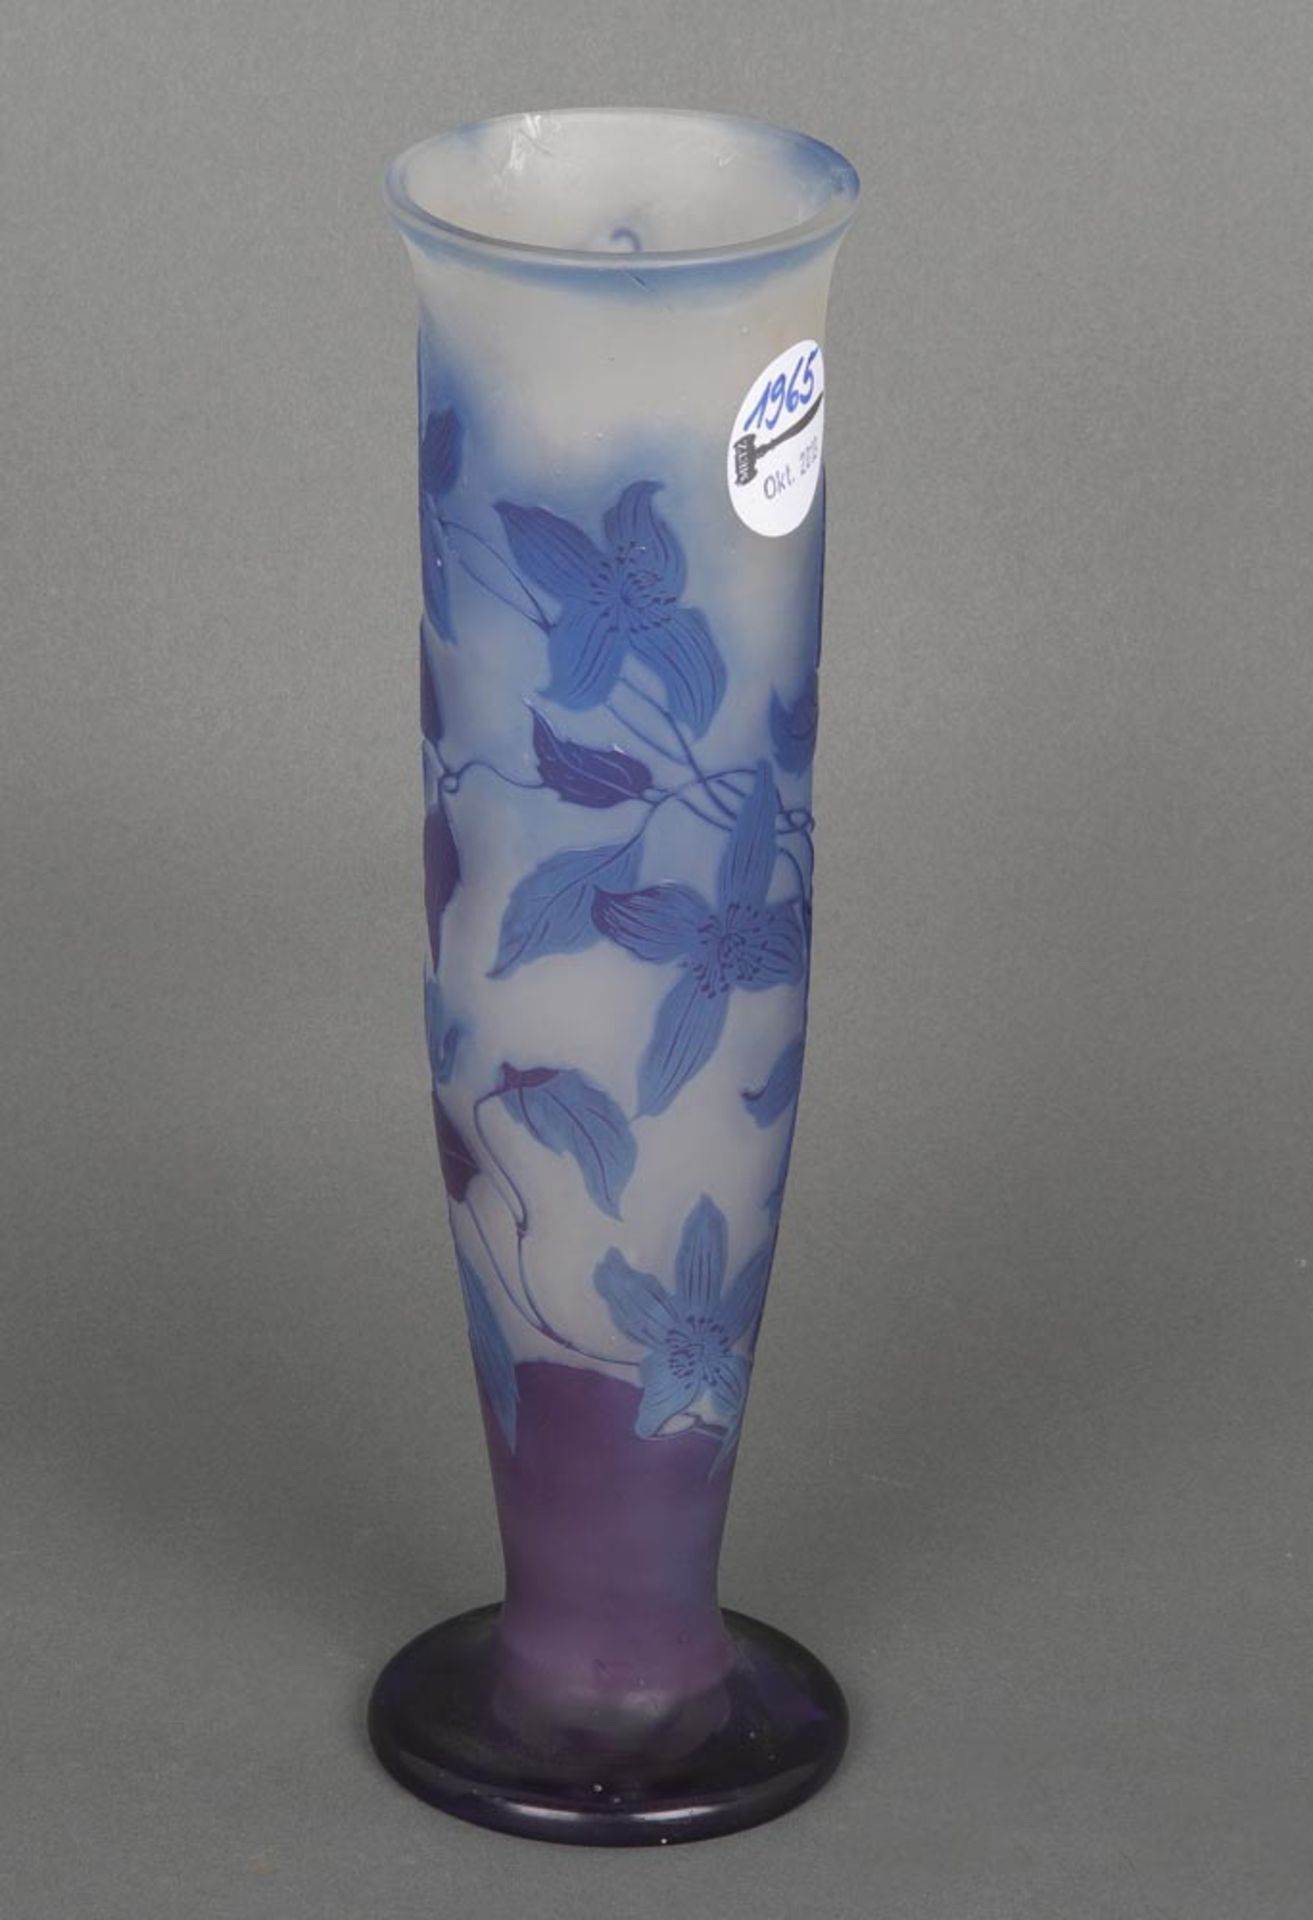 Jugendstil-Vase. Nancy, Émile Gallé um 1900. Farbloses Glas, farbig überfangen, geätzt und